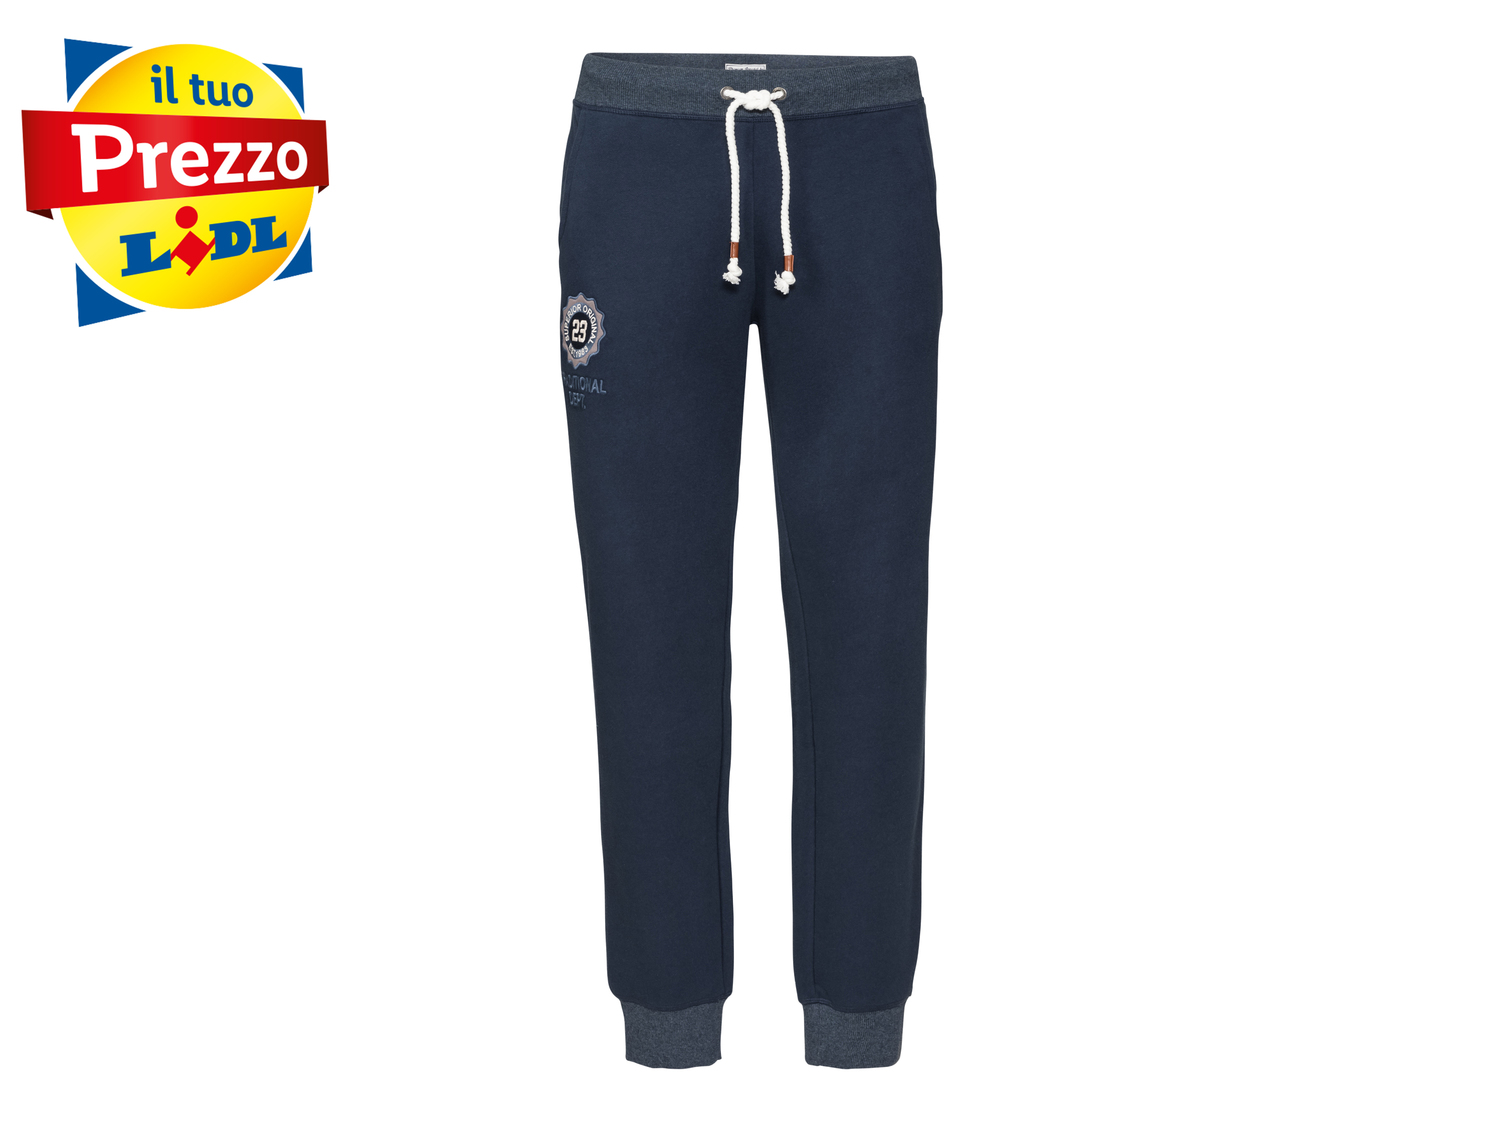 Pantaloni sportivi da uomo Livergy, prezzo 11.99 &#8364;  
Misure: S-XL
- Oeko tex NEW